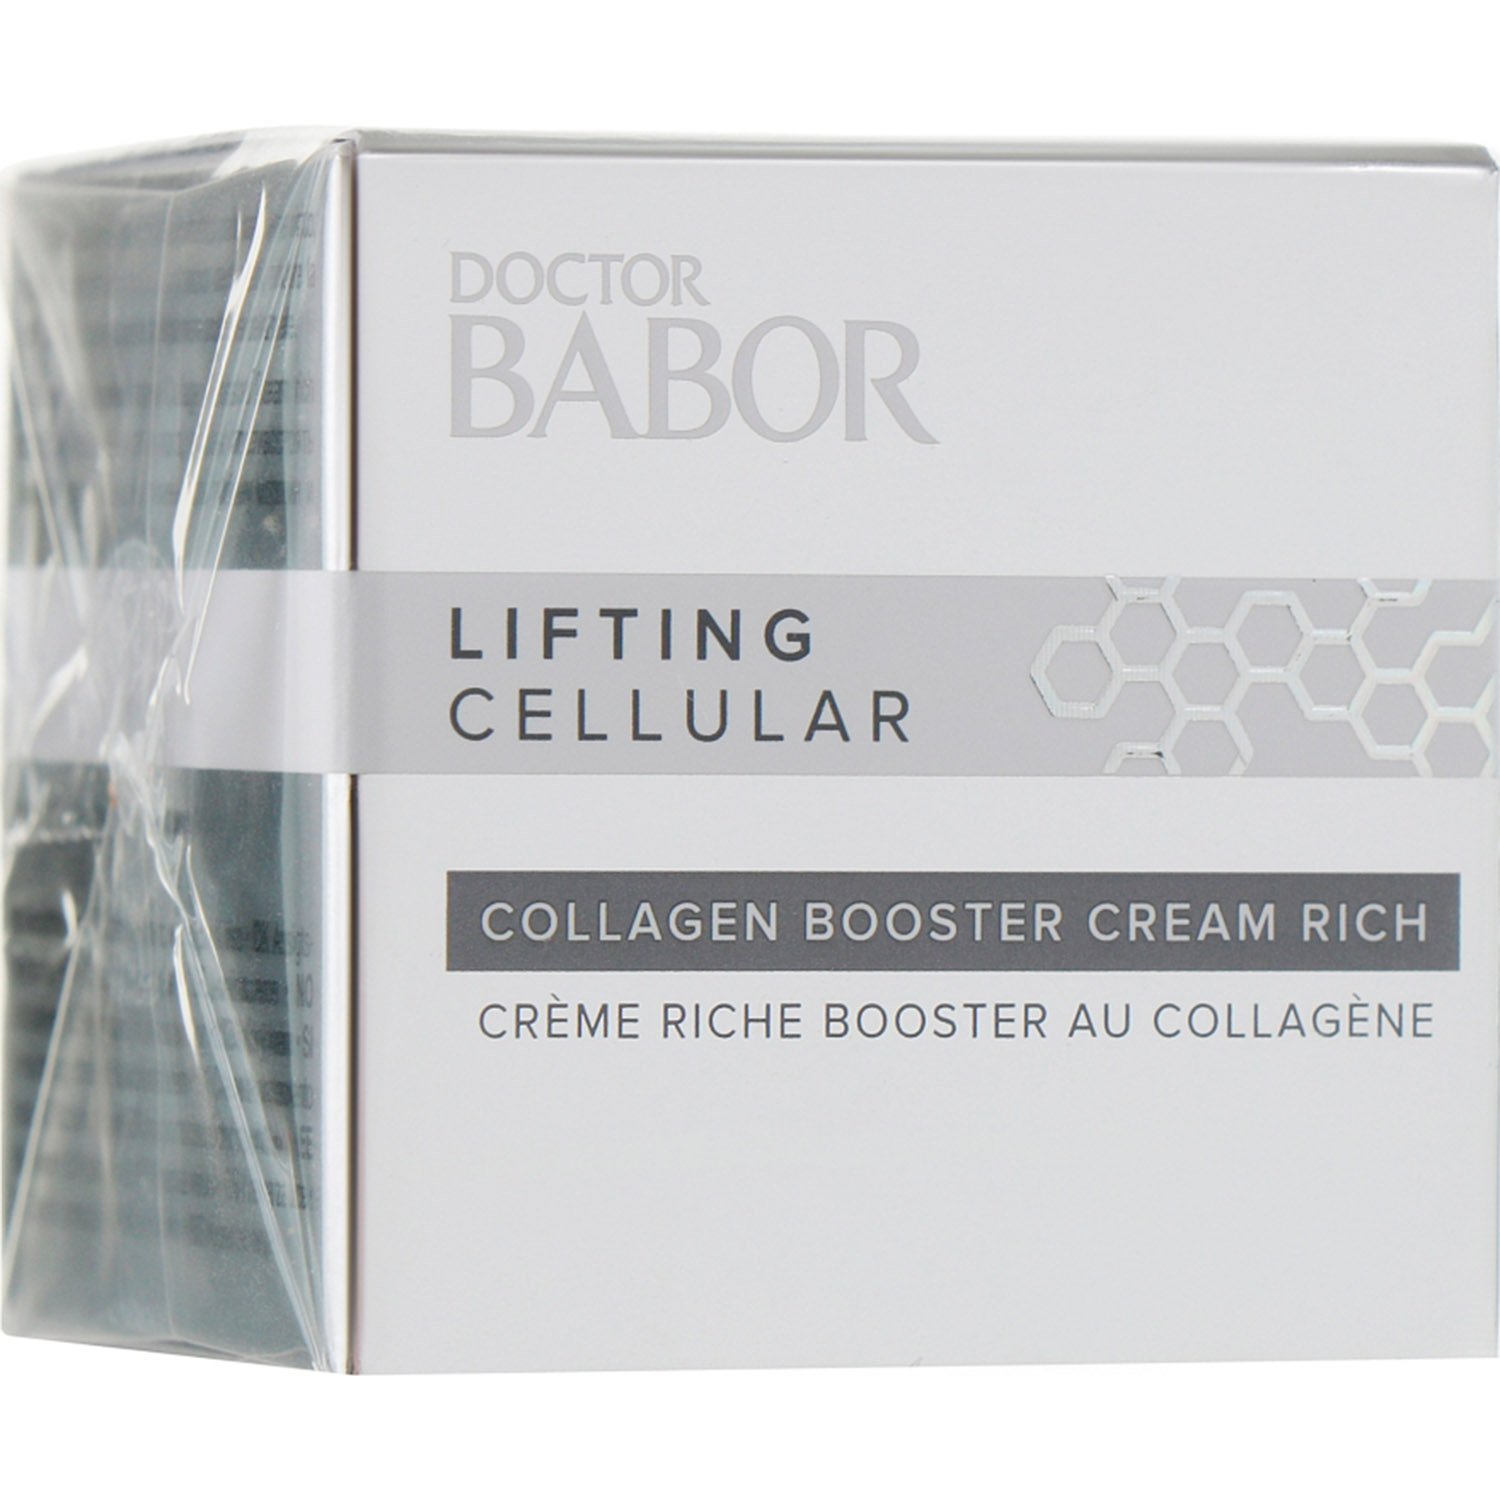 Крем-бустер для лица Babor Doctor Babor Lifting Cellular Collagen Booster Cream, 50 мл - фото 2